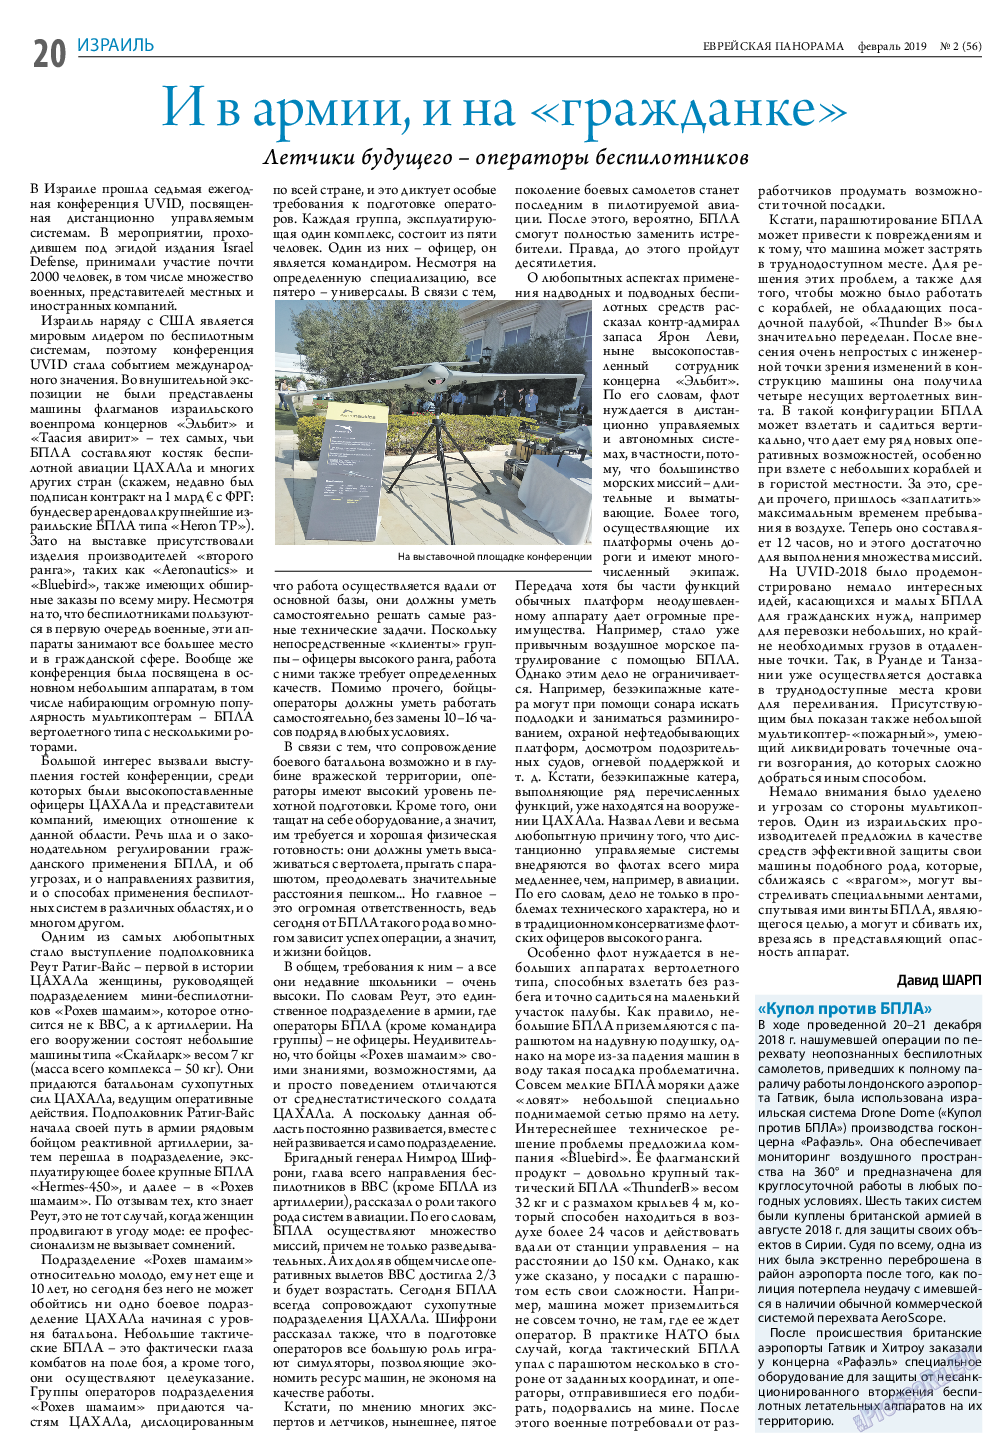 Еврейская панорама, газета. 2019 №2 стр.20